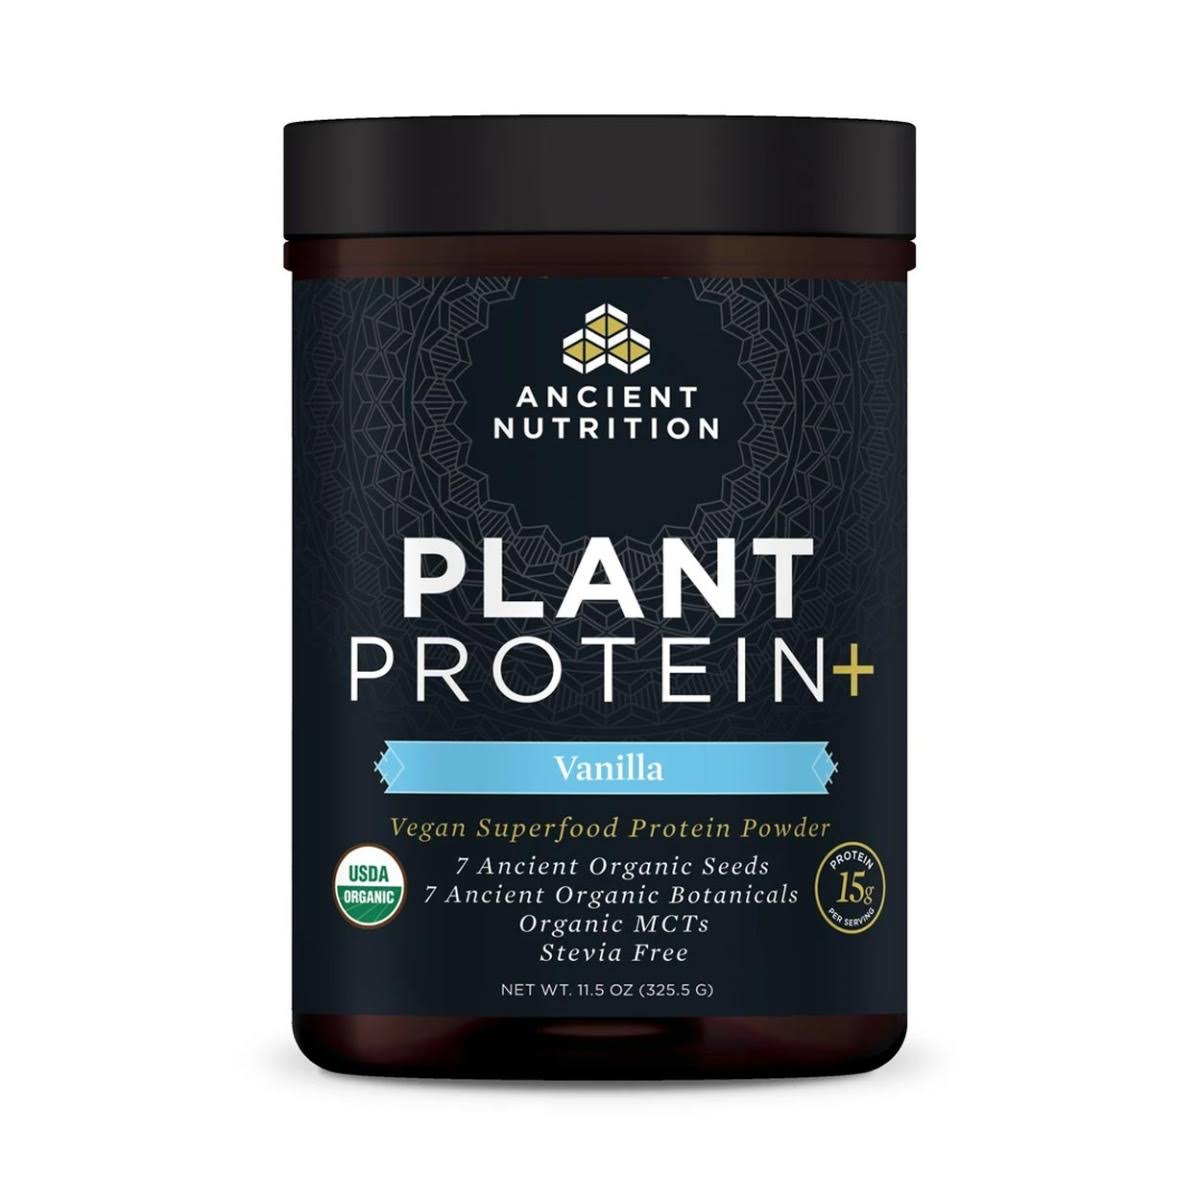 Ancient Nutrition | Plant Protein+ - Vanilla